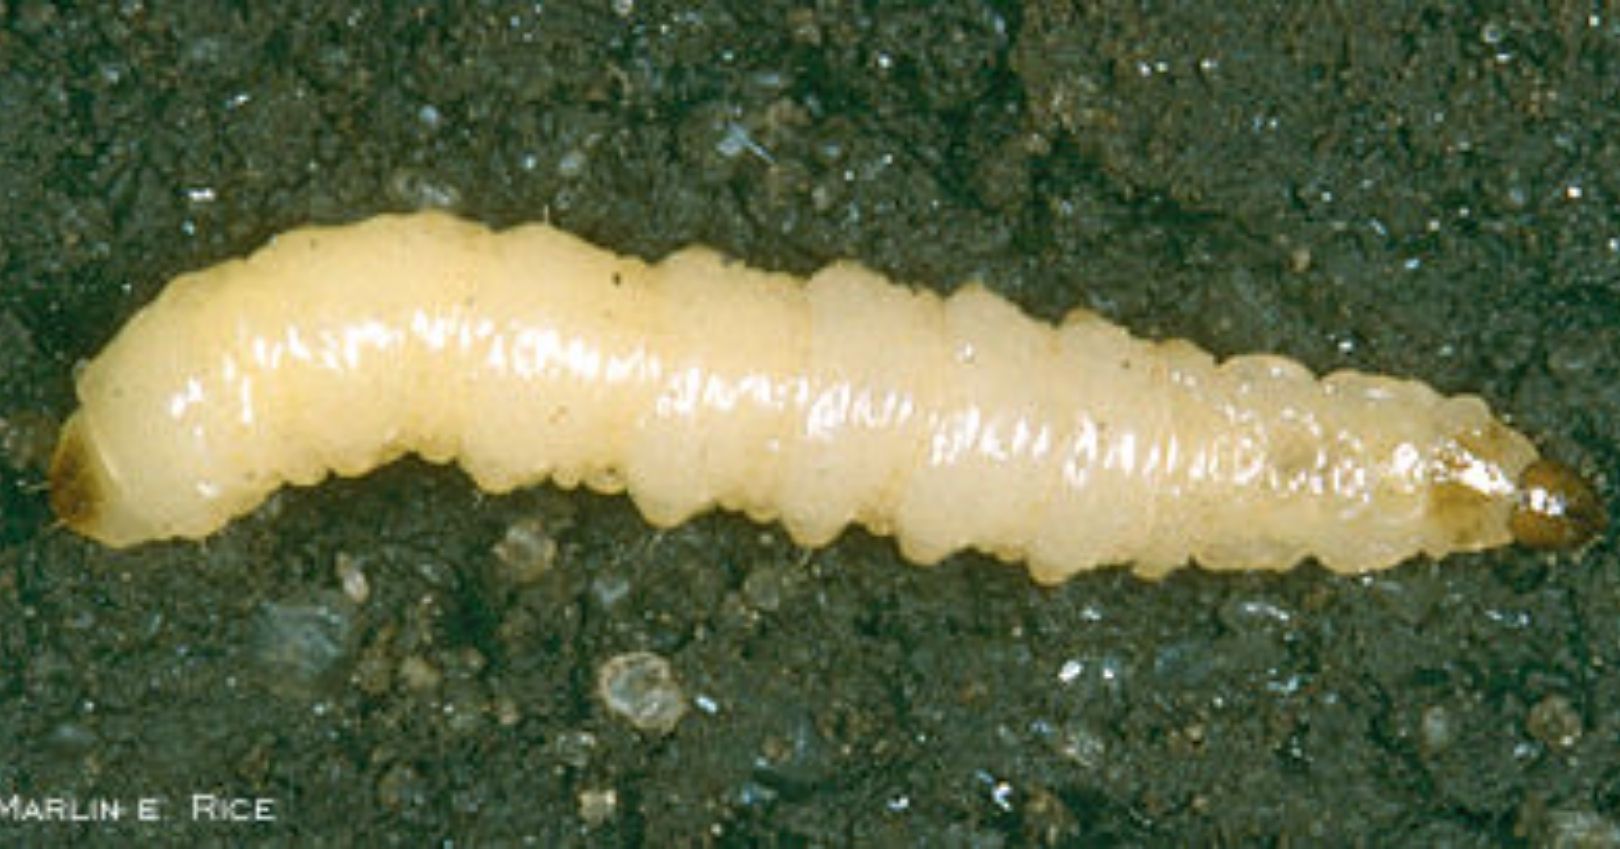 Western Corn Rootworm Larva